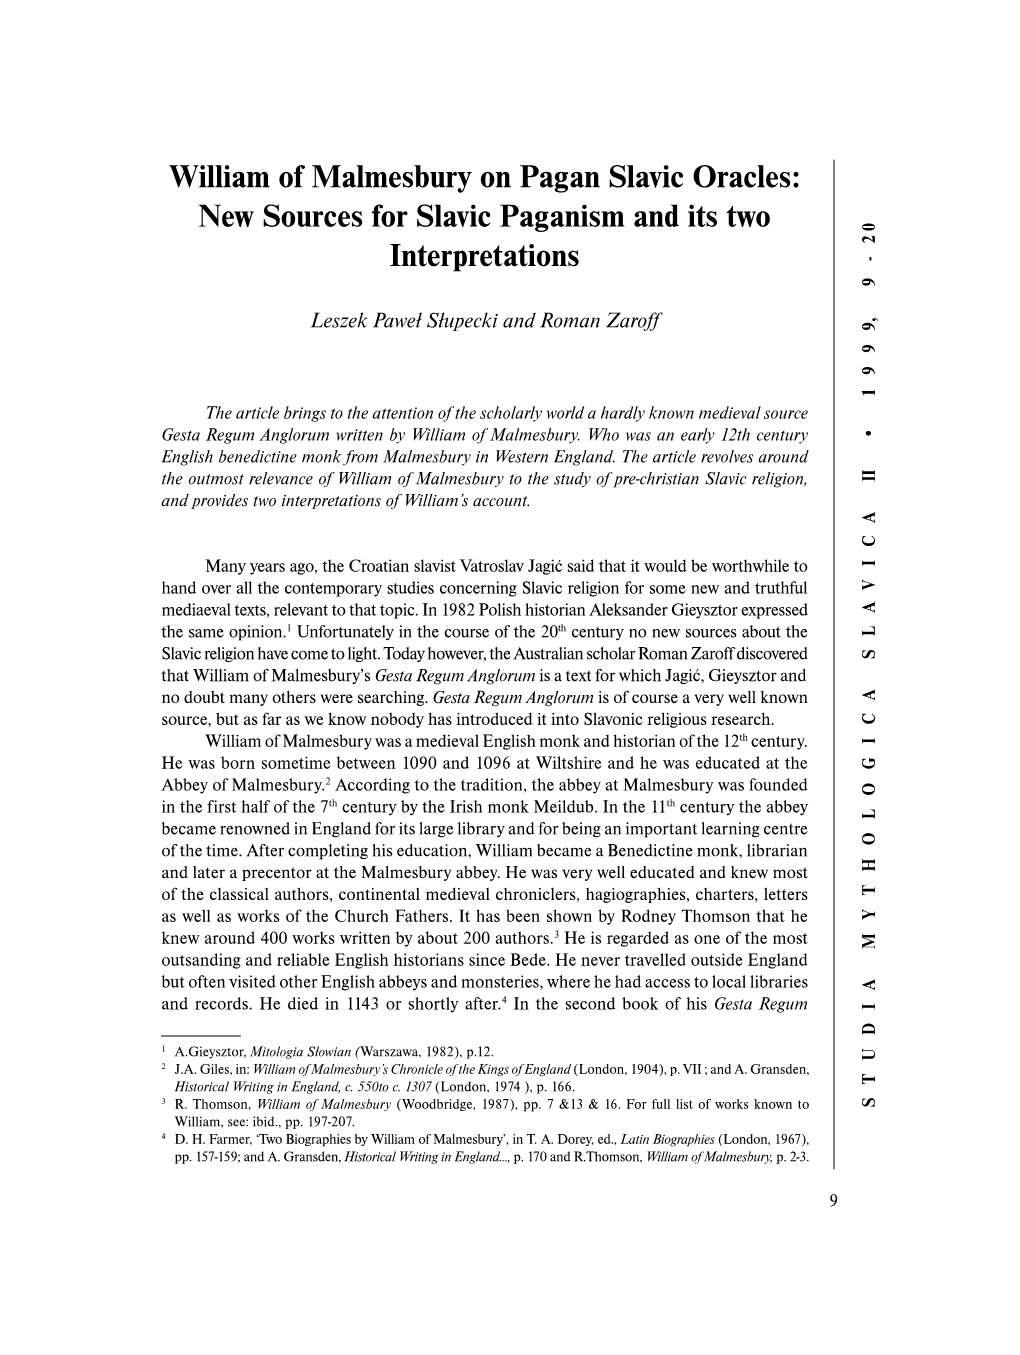 William of Malmesbury on Pagan Slavic Oracles: New Sources for Slavic Paganism and Its Two Interpretations